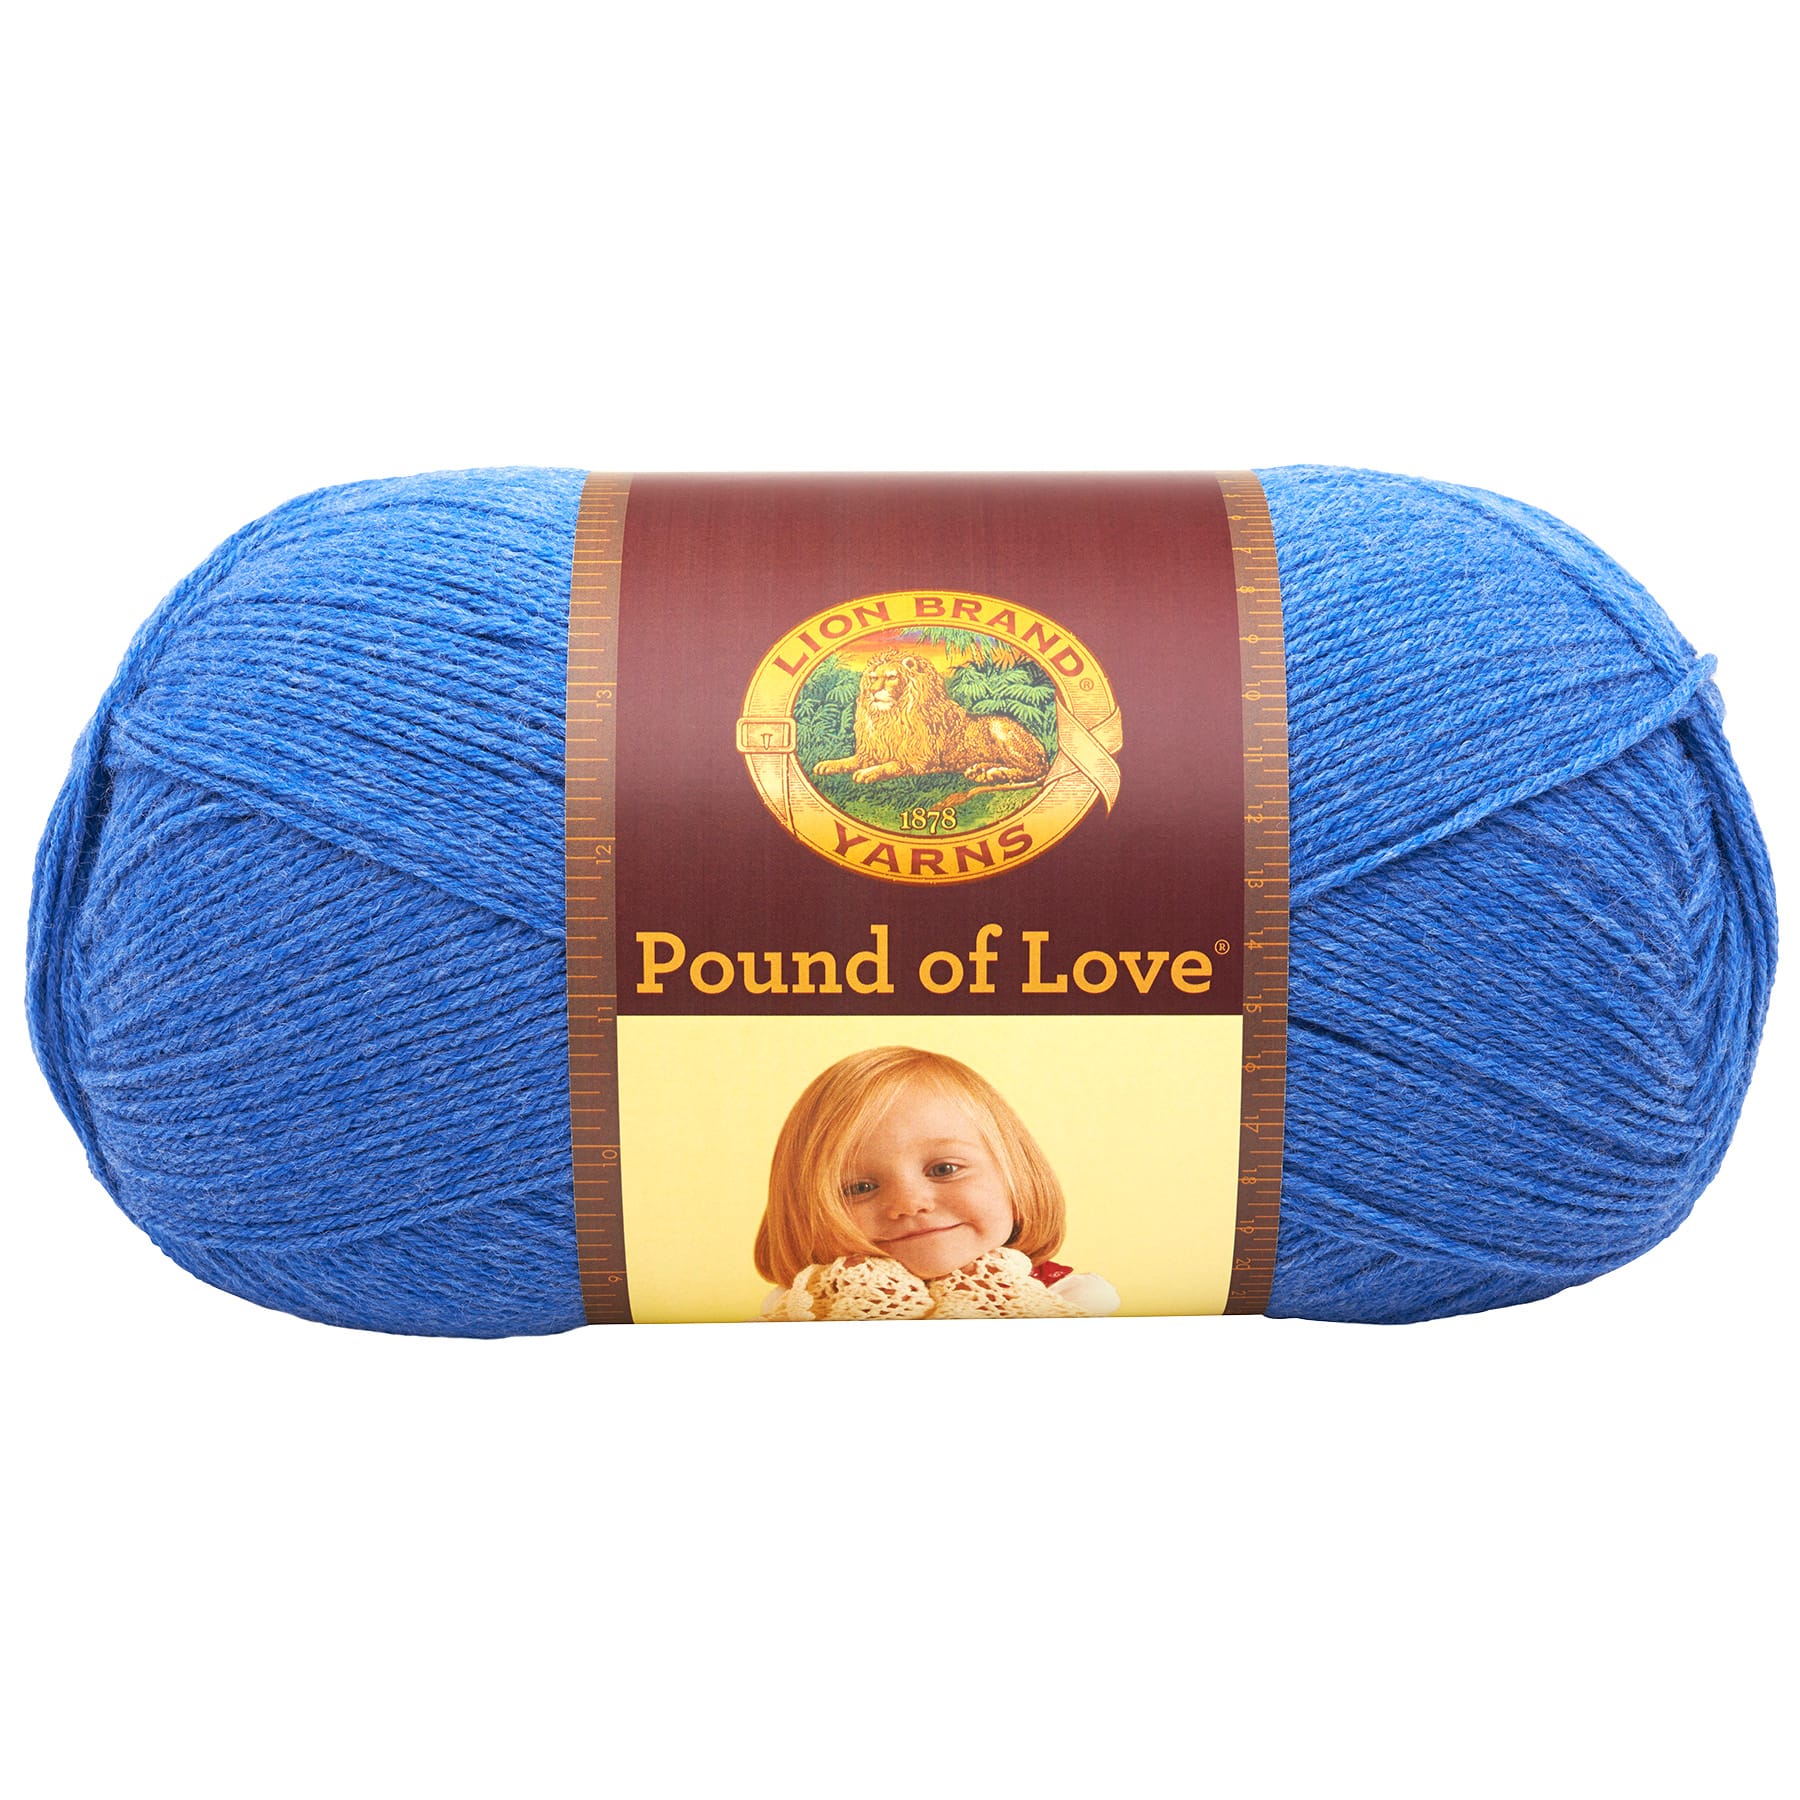 Lion Brand Pound of Love, Premium Acrylic Yarn,932m/1020yd Hunter